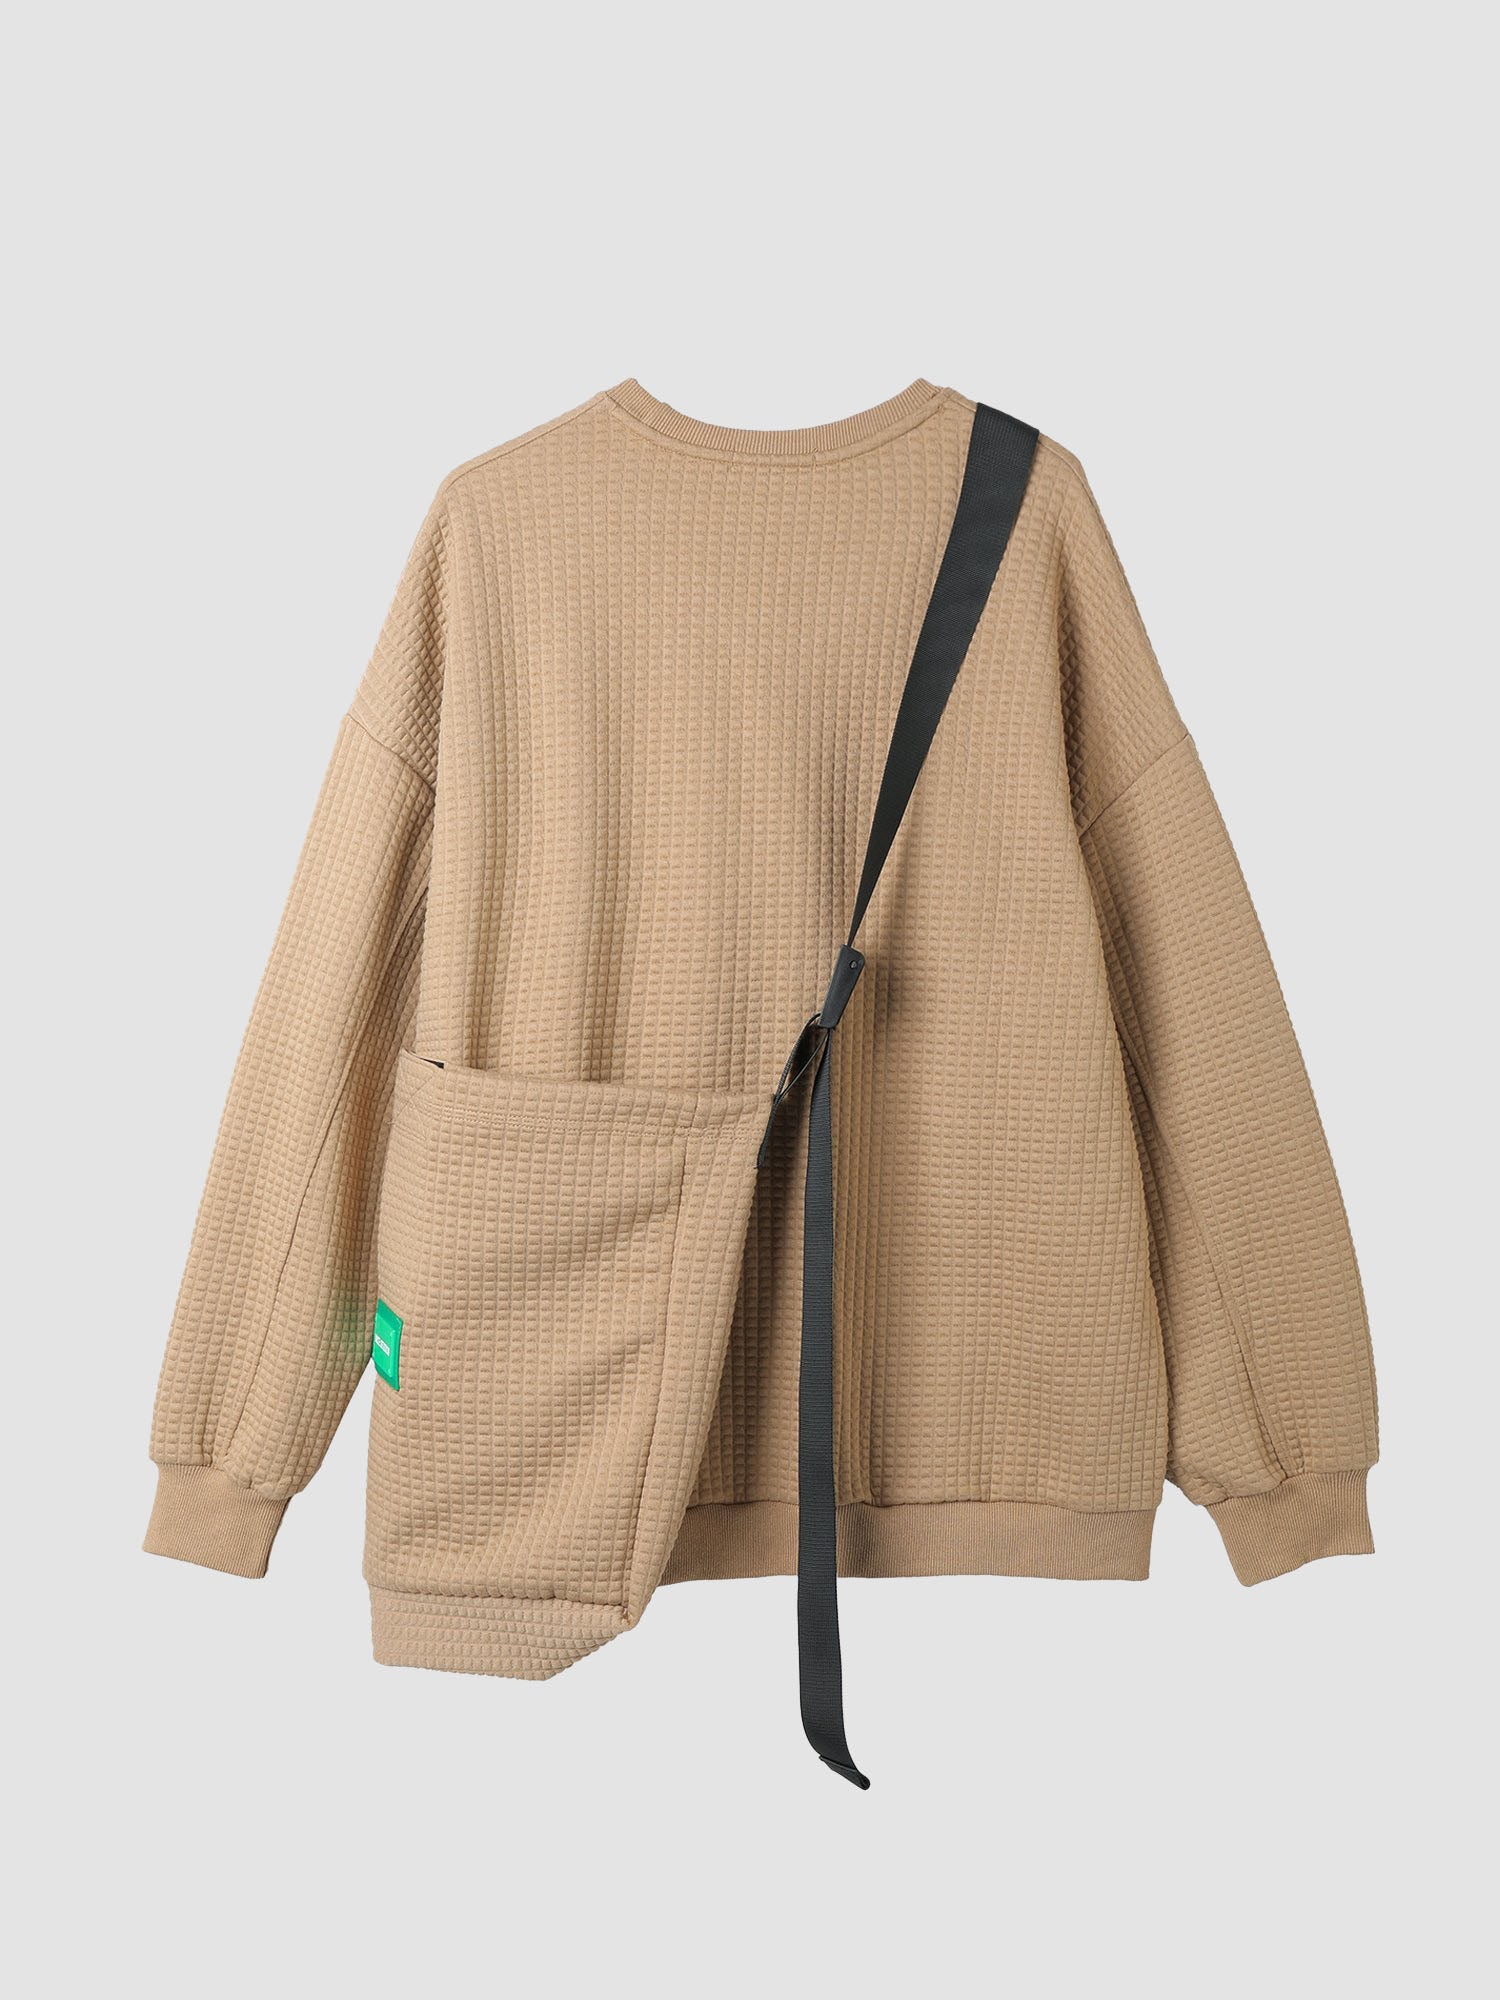 JUSTNOTAG Street Round Neck Sweatshirts - Contain Bag